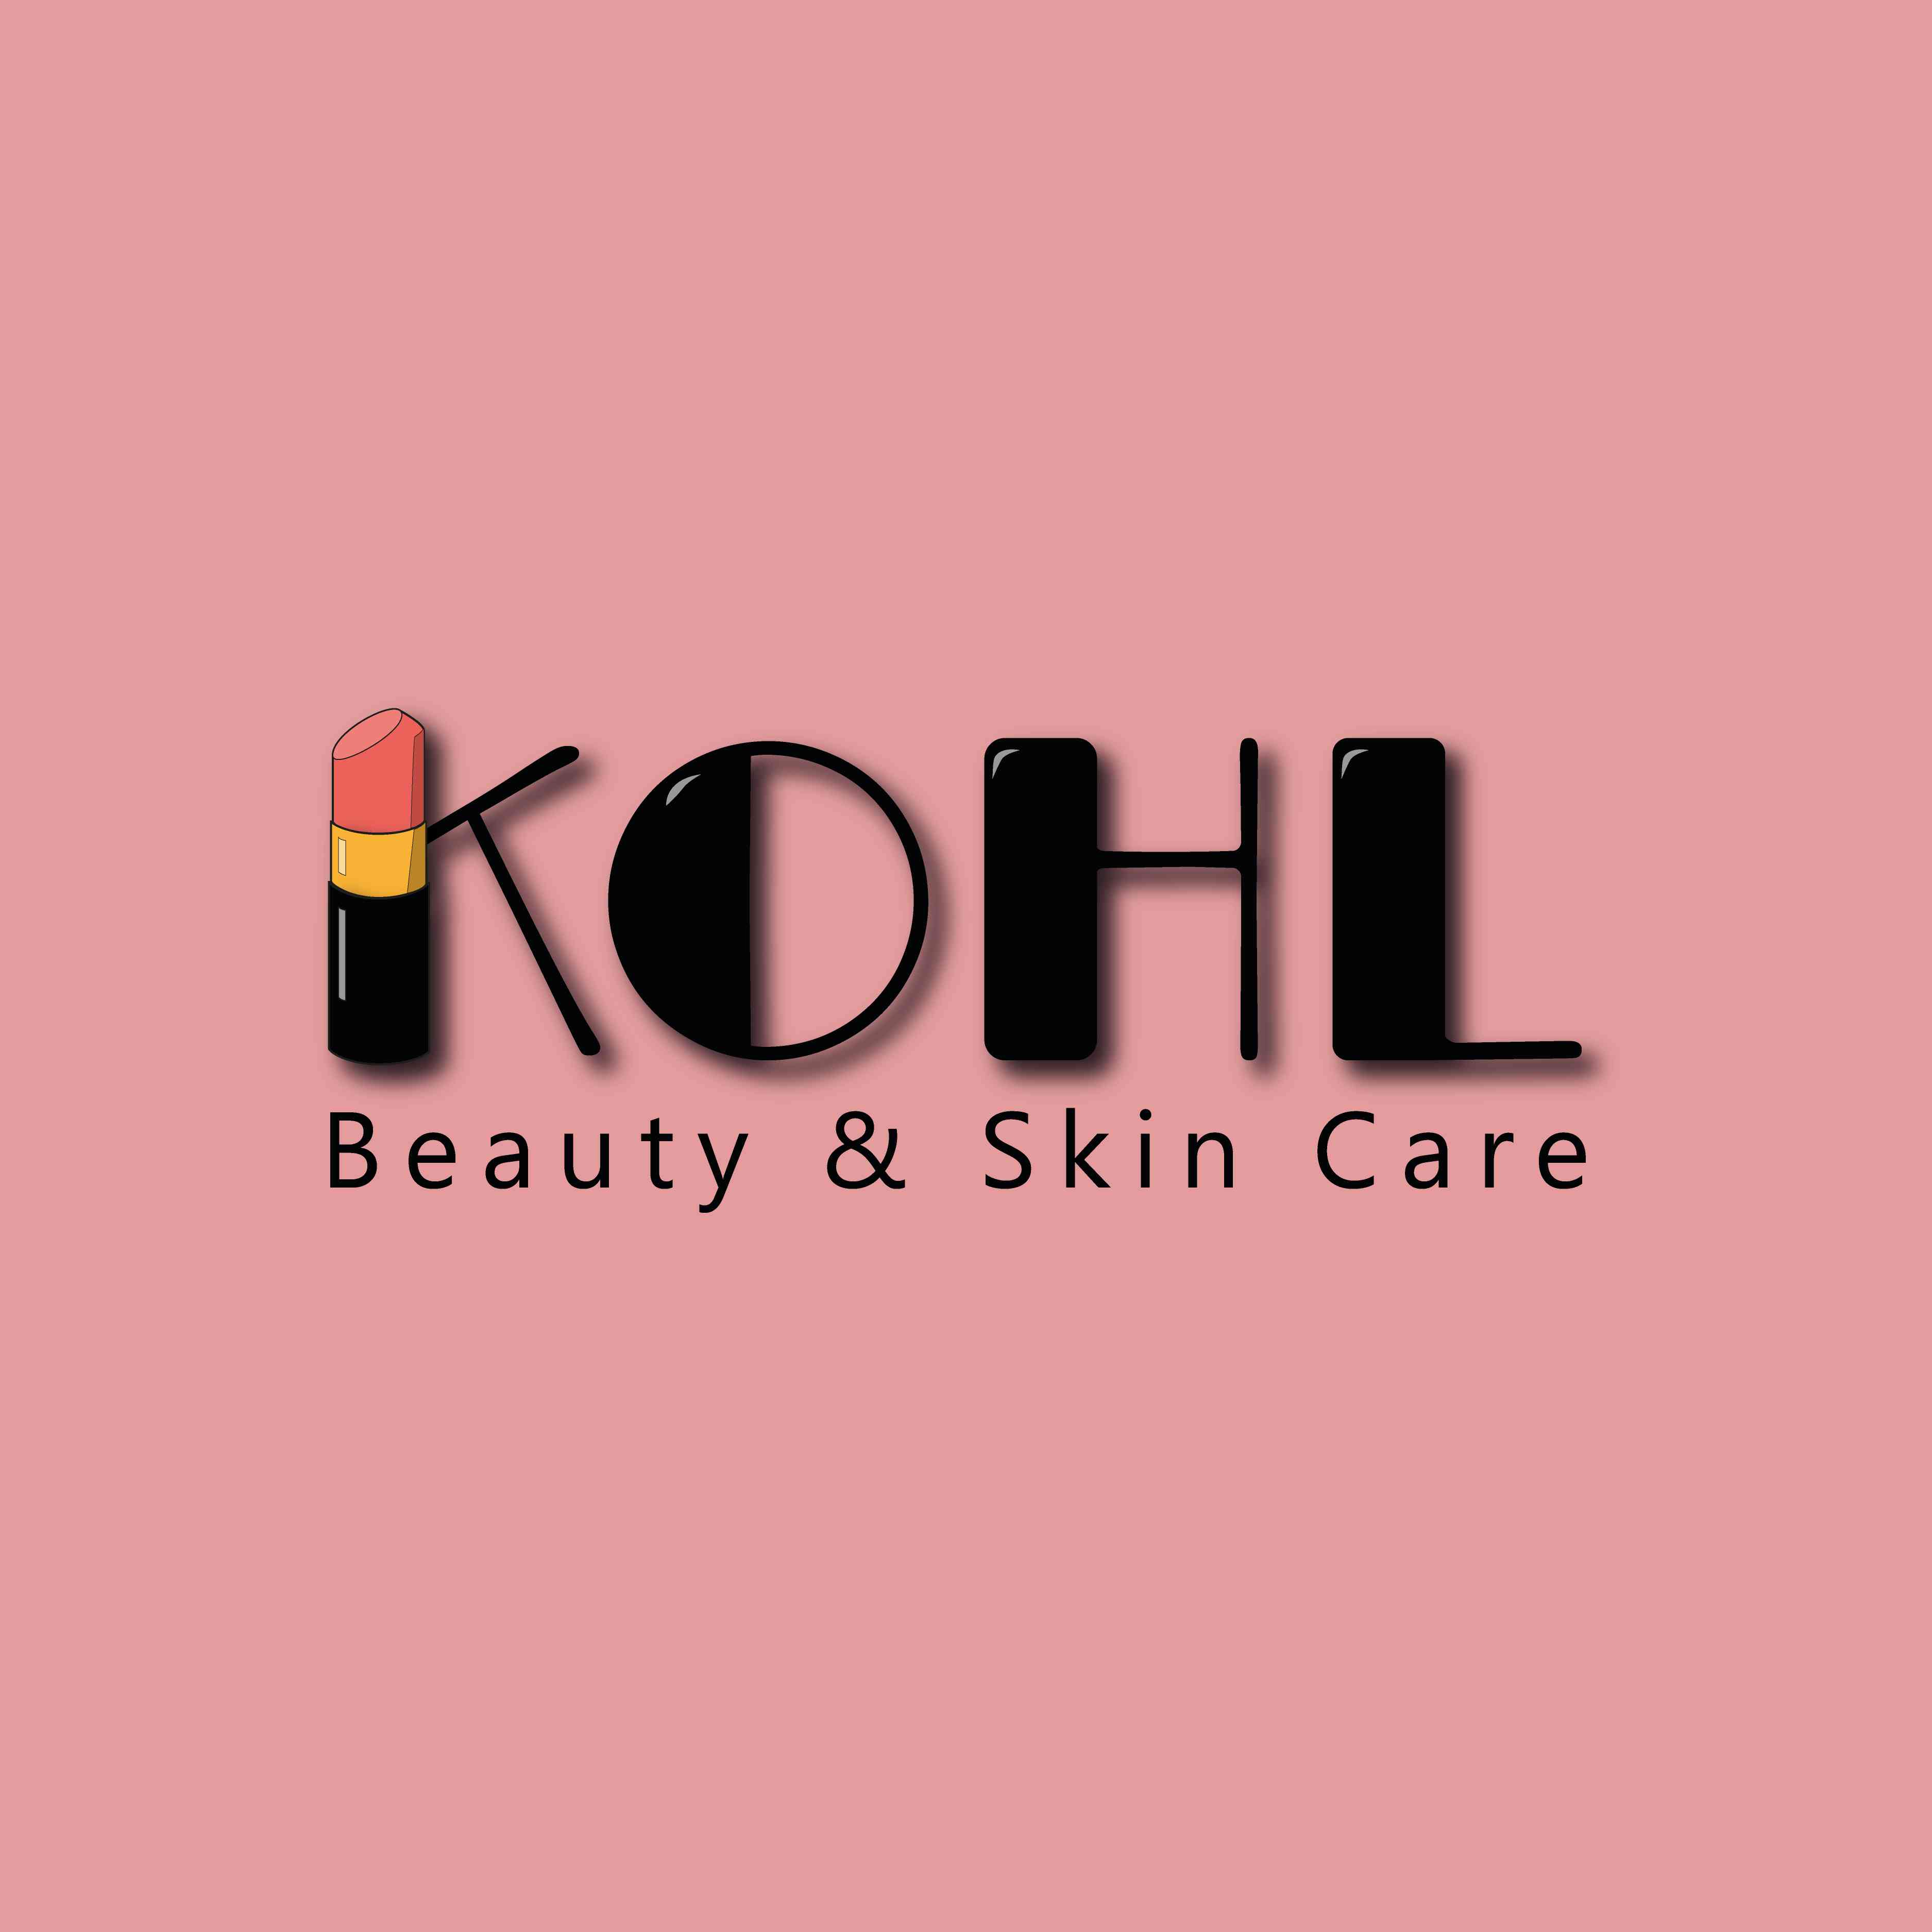 Kohl Beauty & Skincare